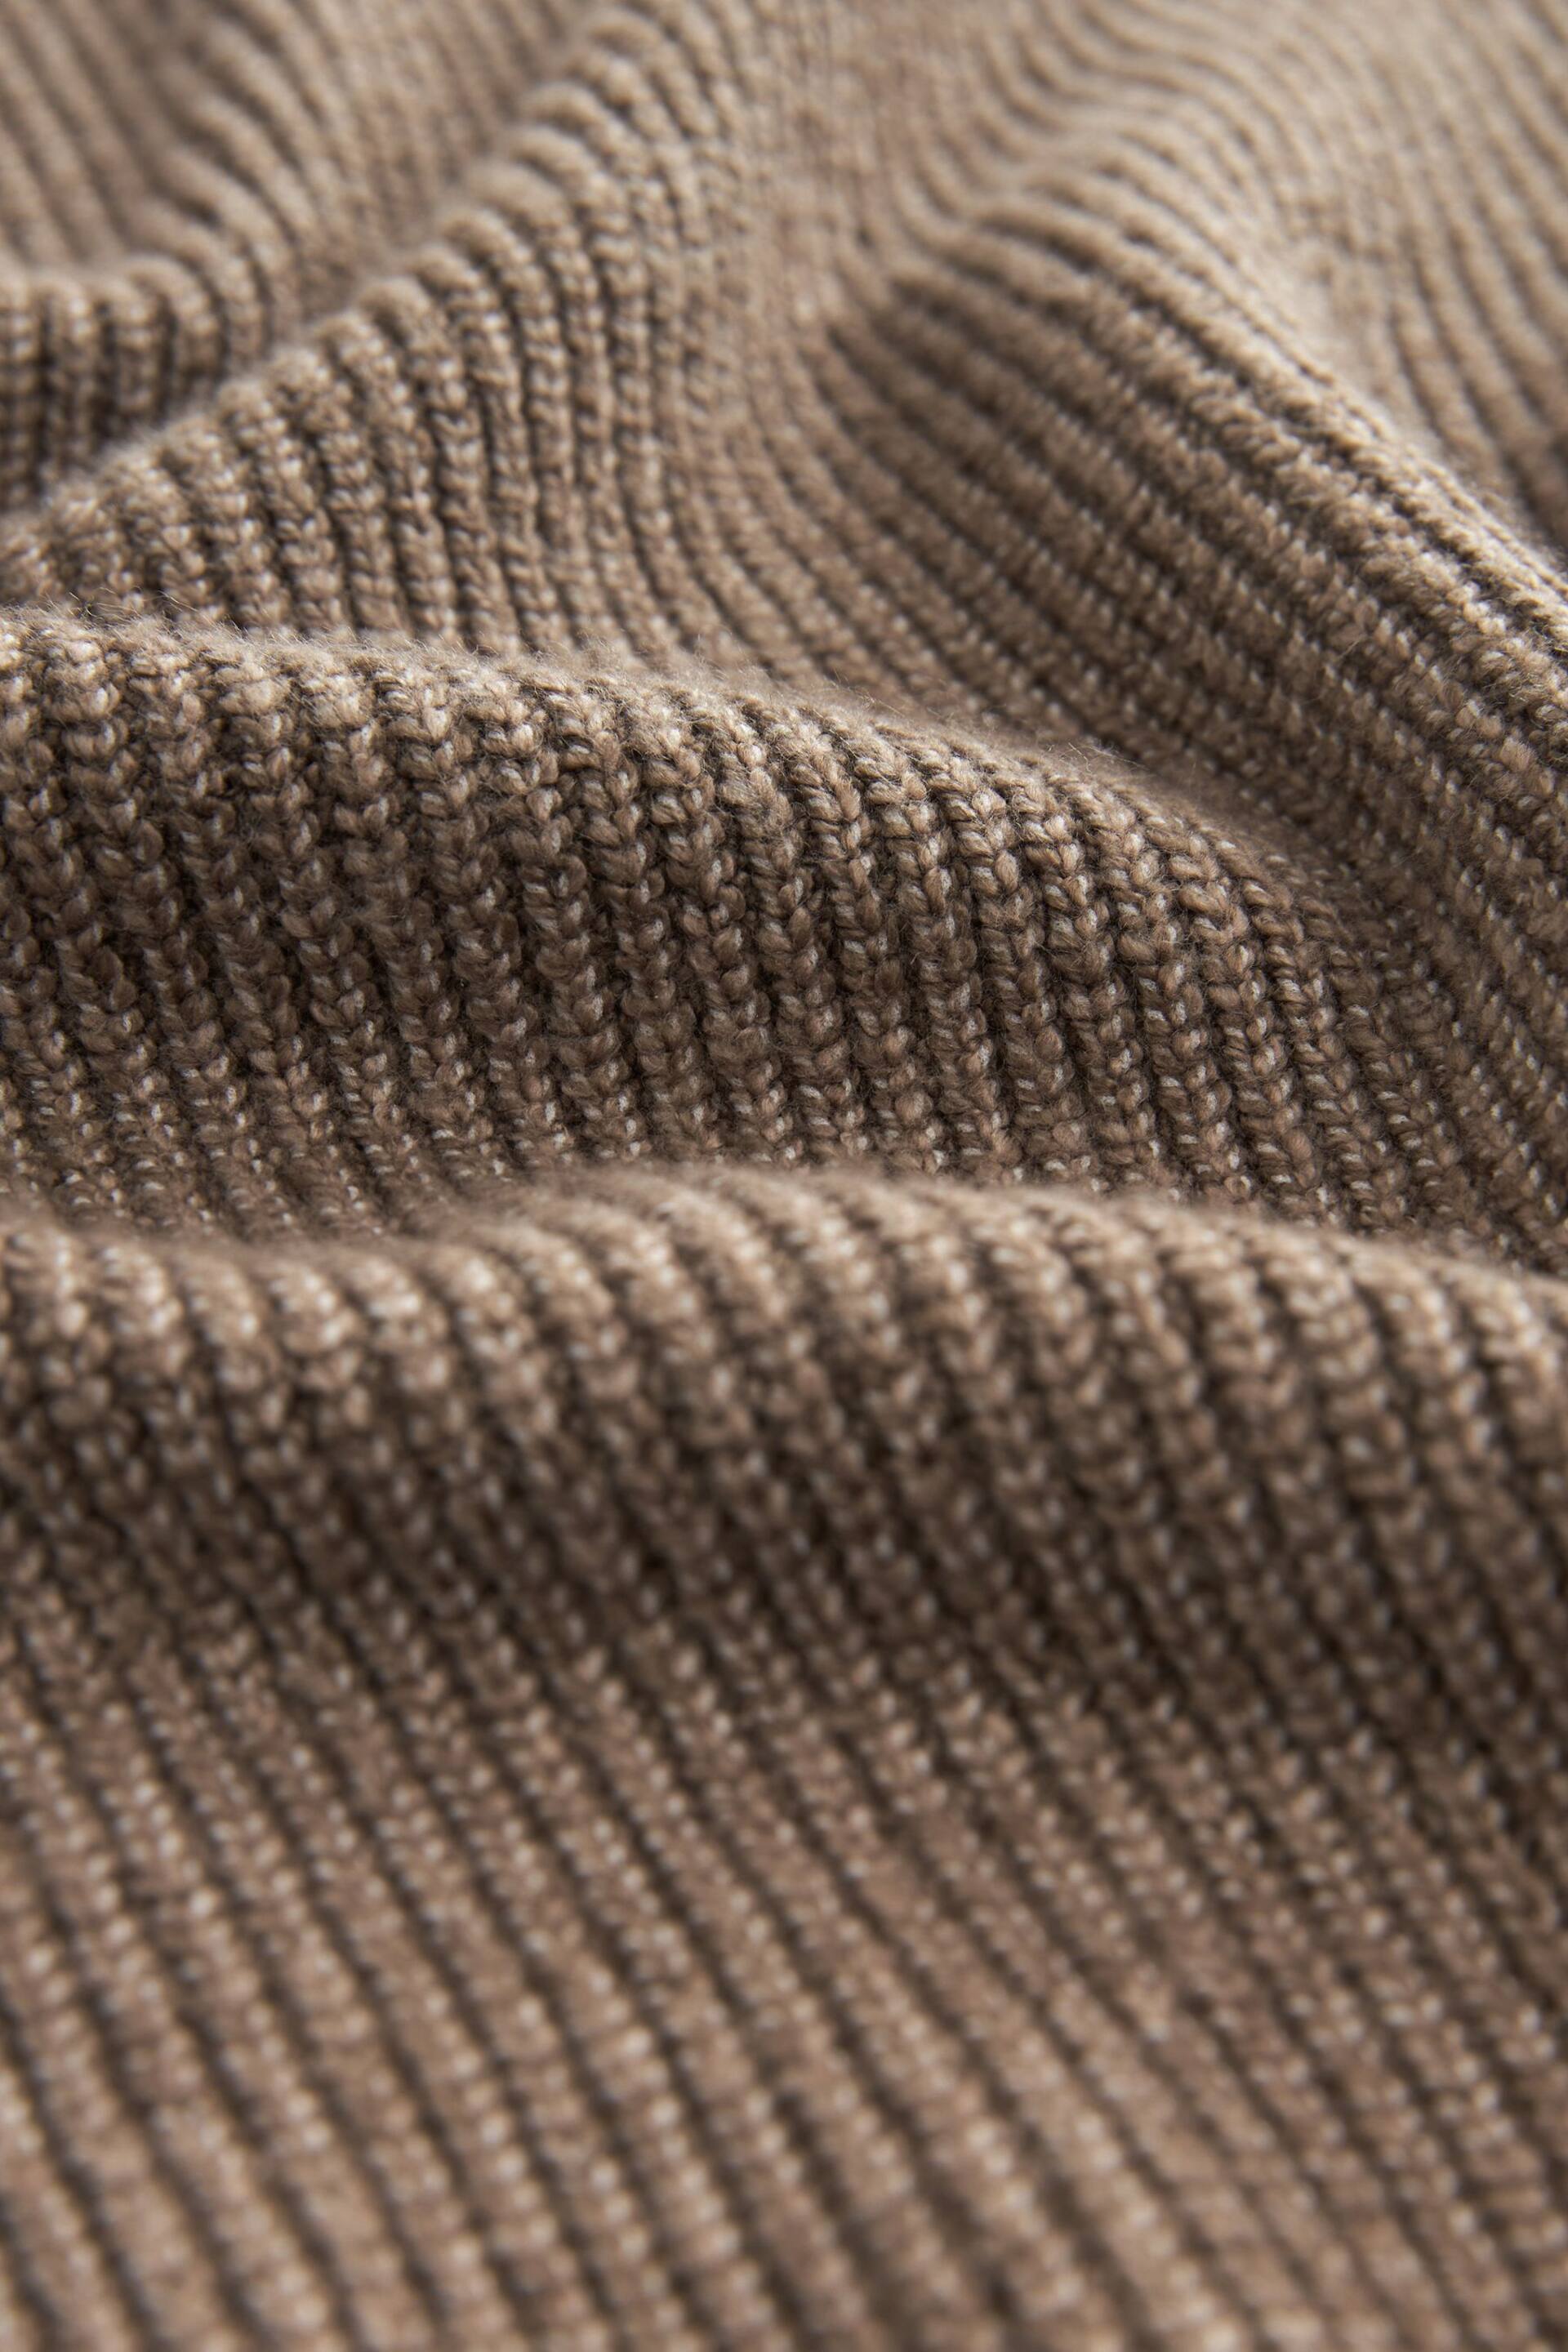 Neutral Regular Cosy Rib Knitted Jumper - Image 4 of 4